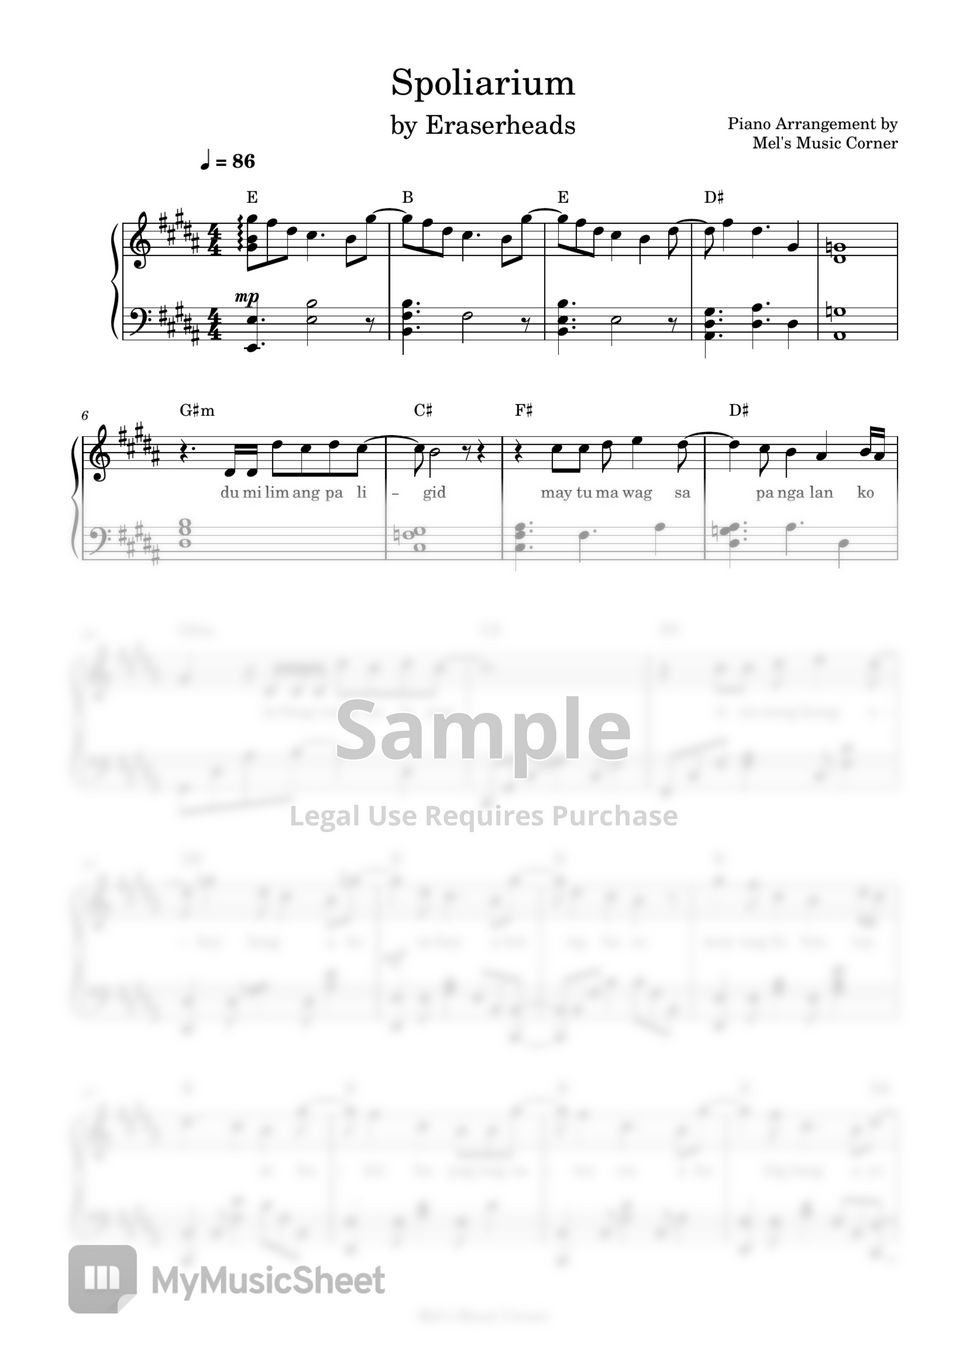 Eraserheads - Spoliarium (piano sheet music) by Mel's Music Corner